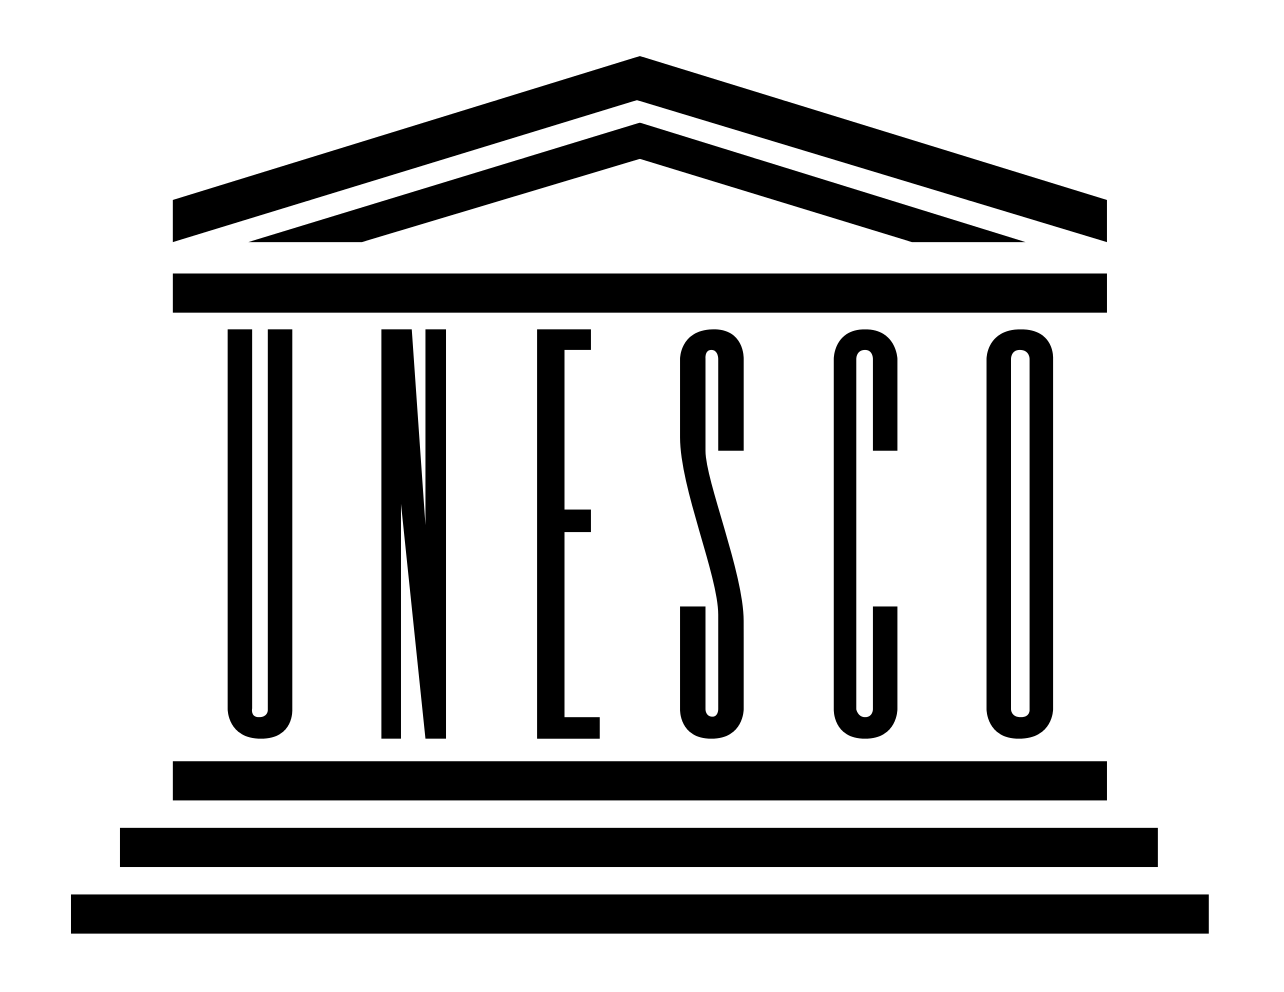 Unesco Logo.